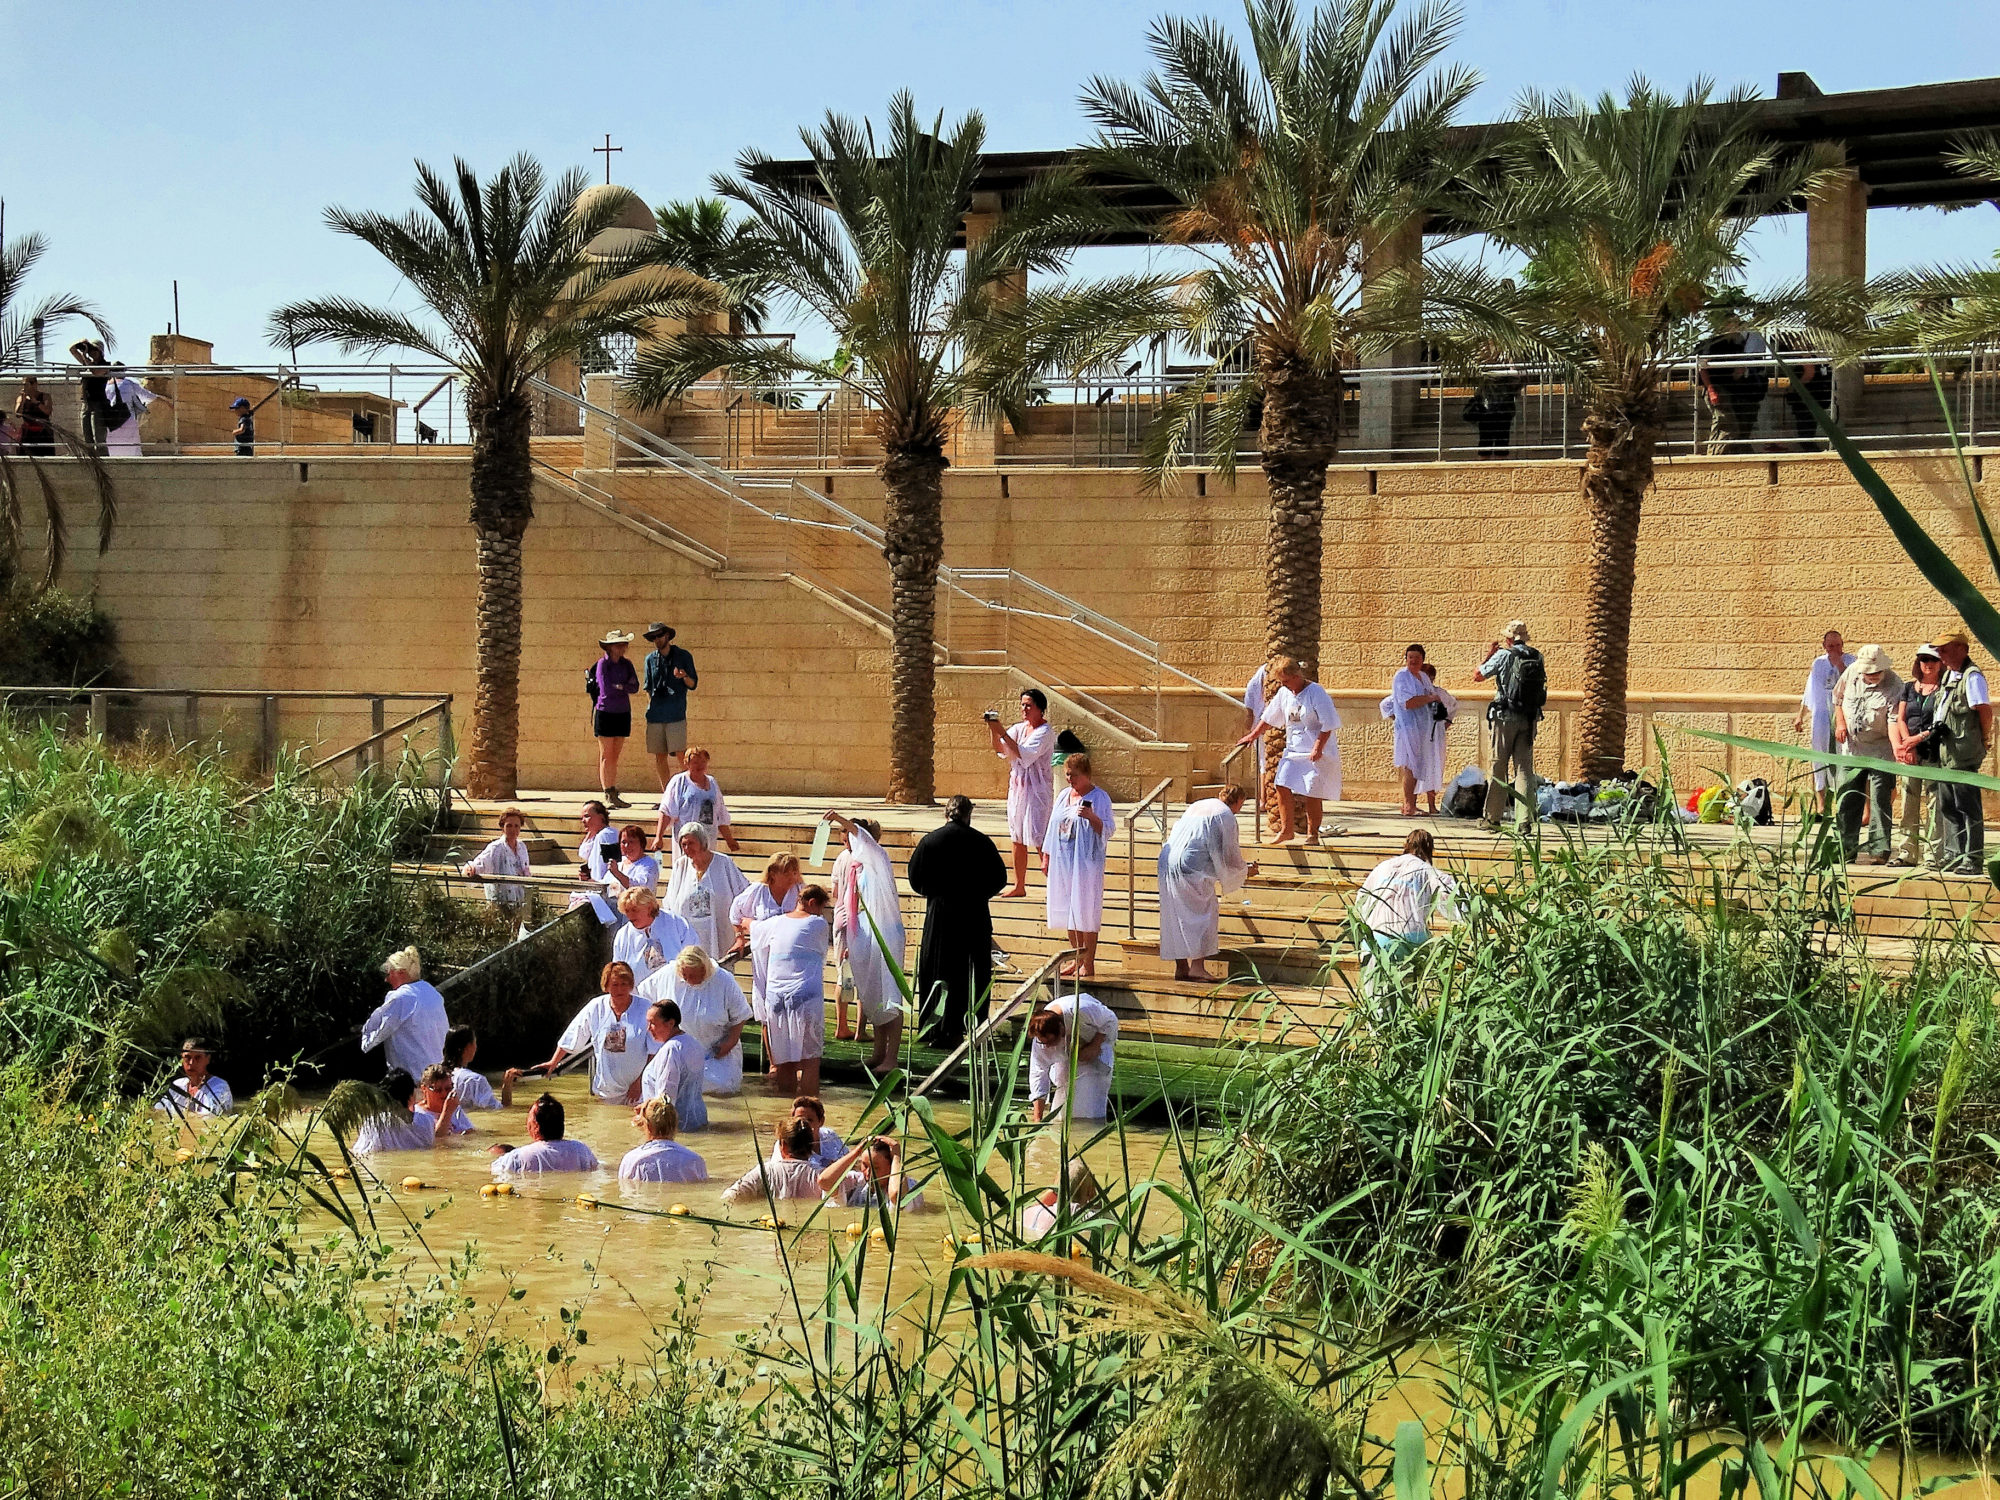 The Baptism Site of Jesus in the Jordan River